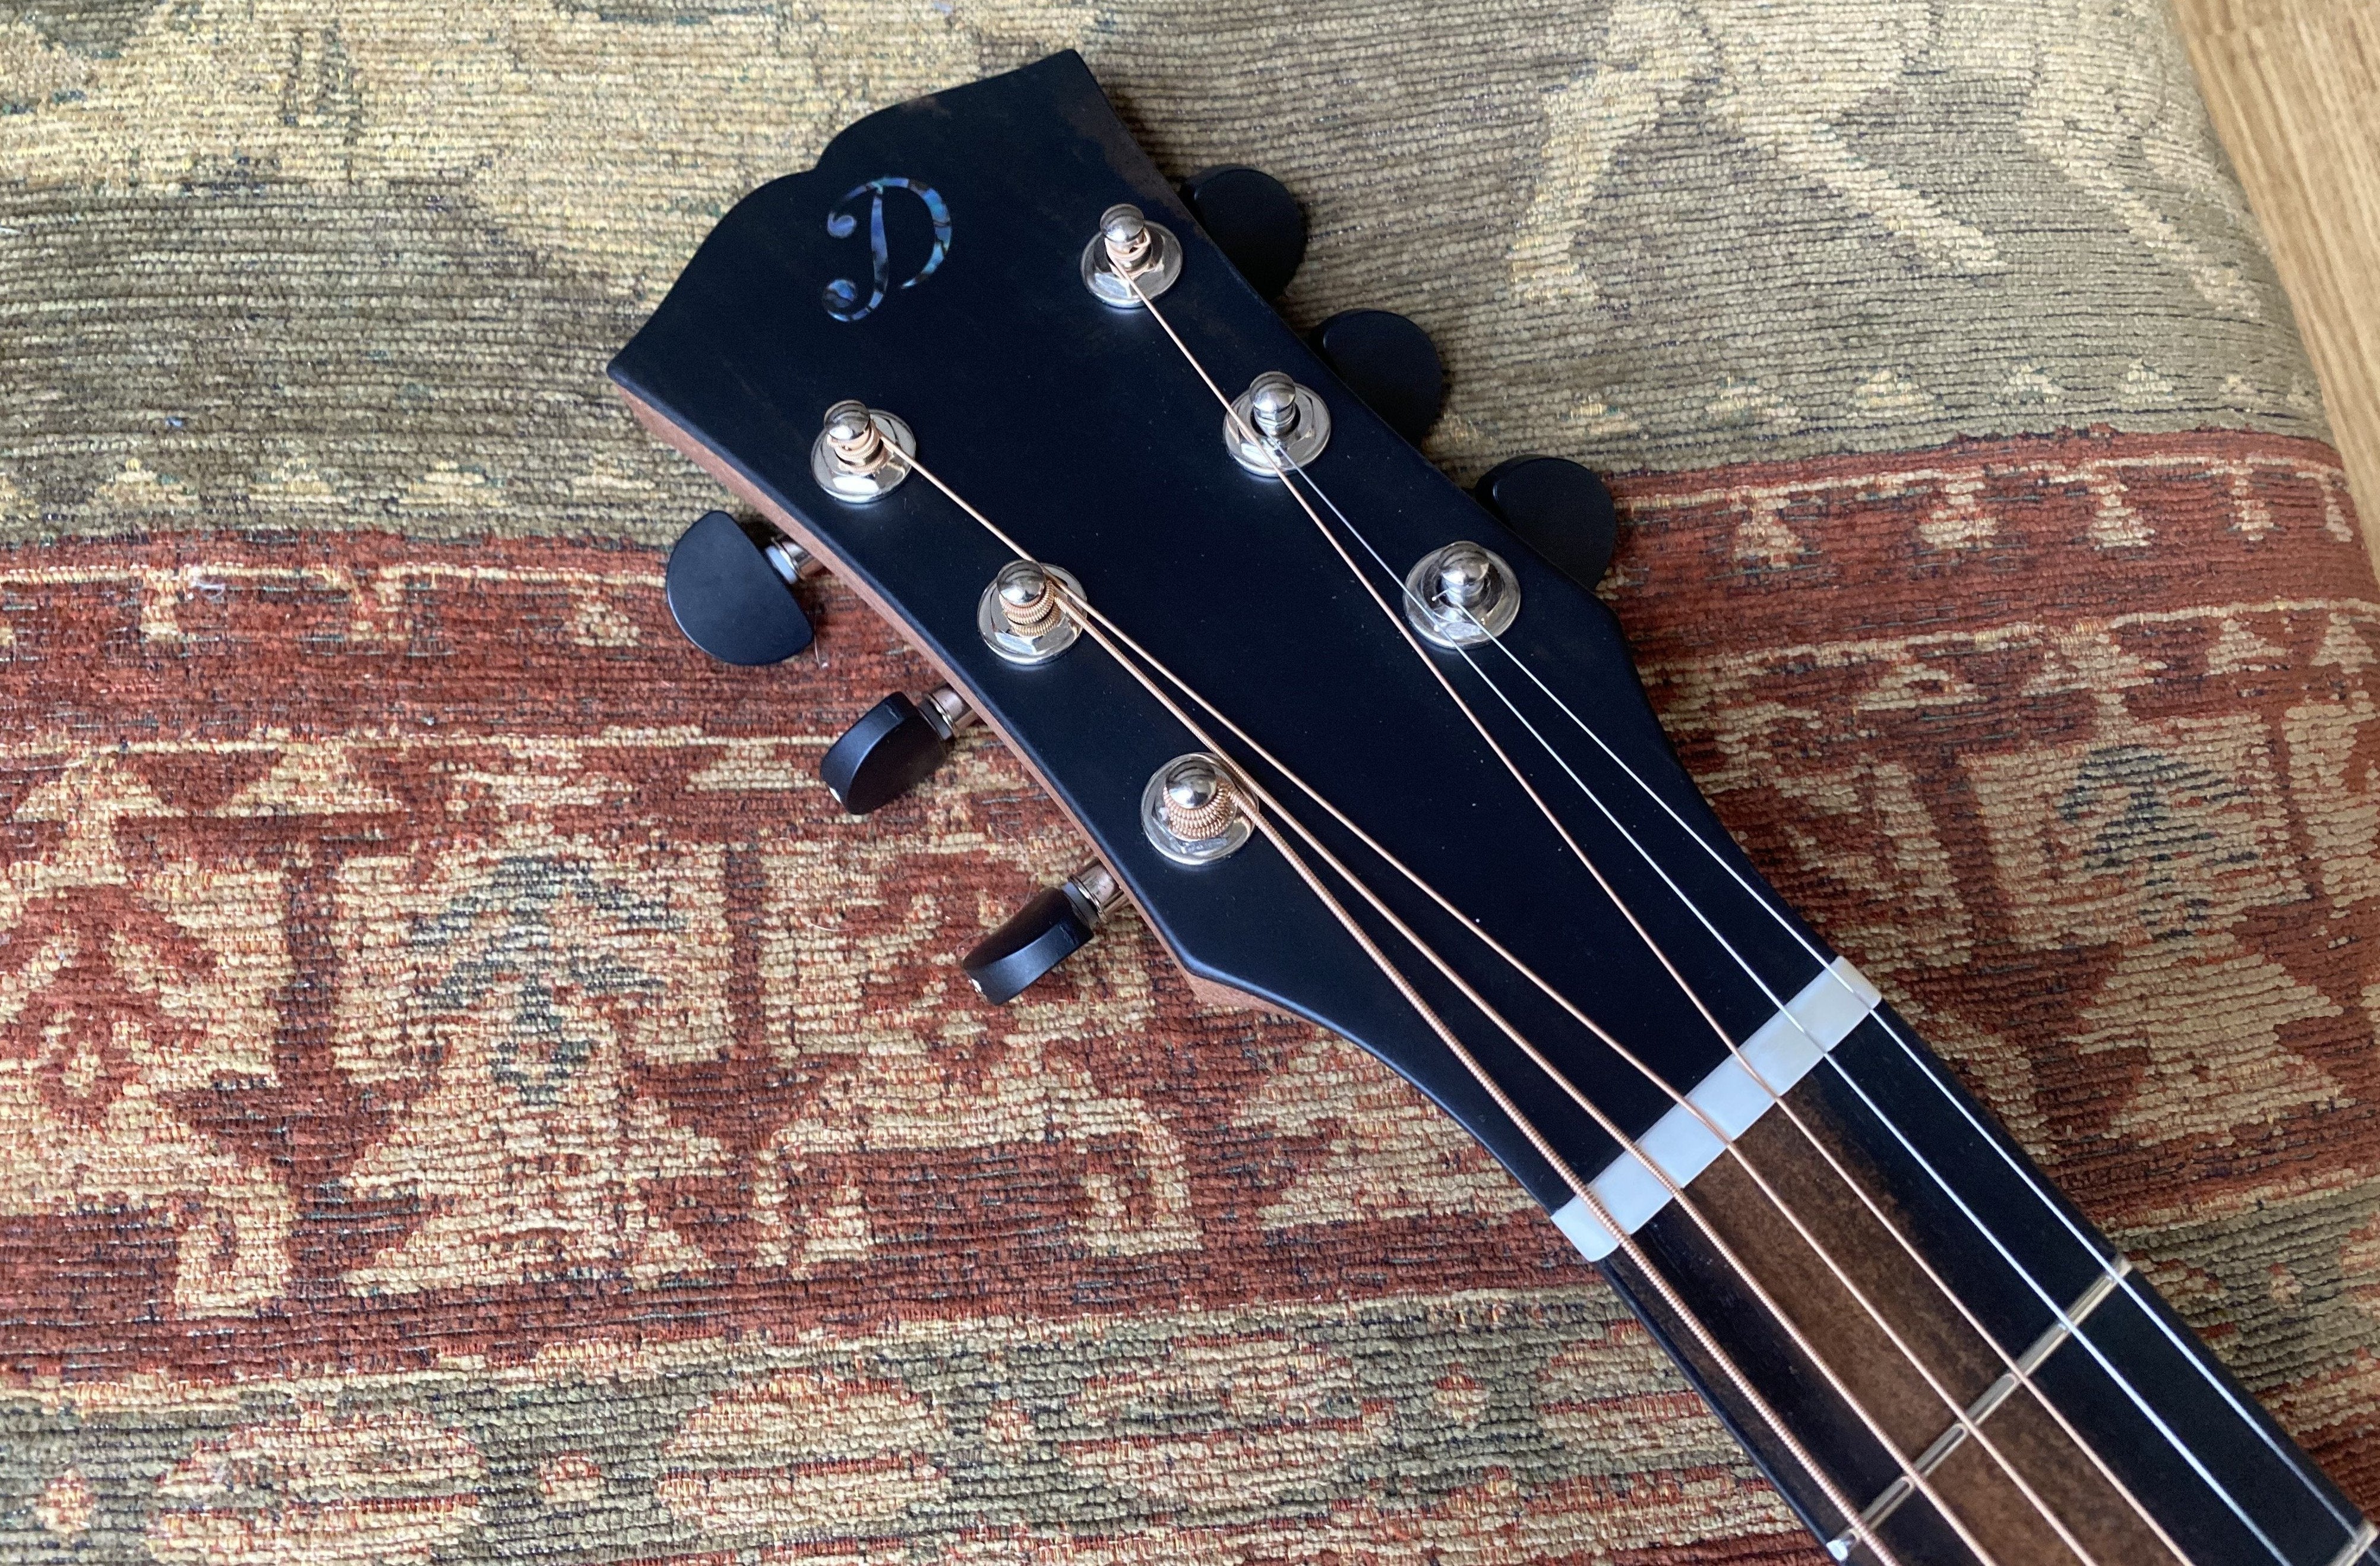 Dowina Walnut Tribute GA Custom #2 . Exclusive To Richards Guitars, Acoustic Guitar for sale at Richards Guitars.